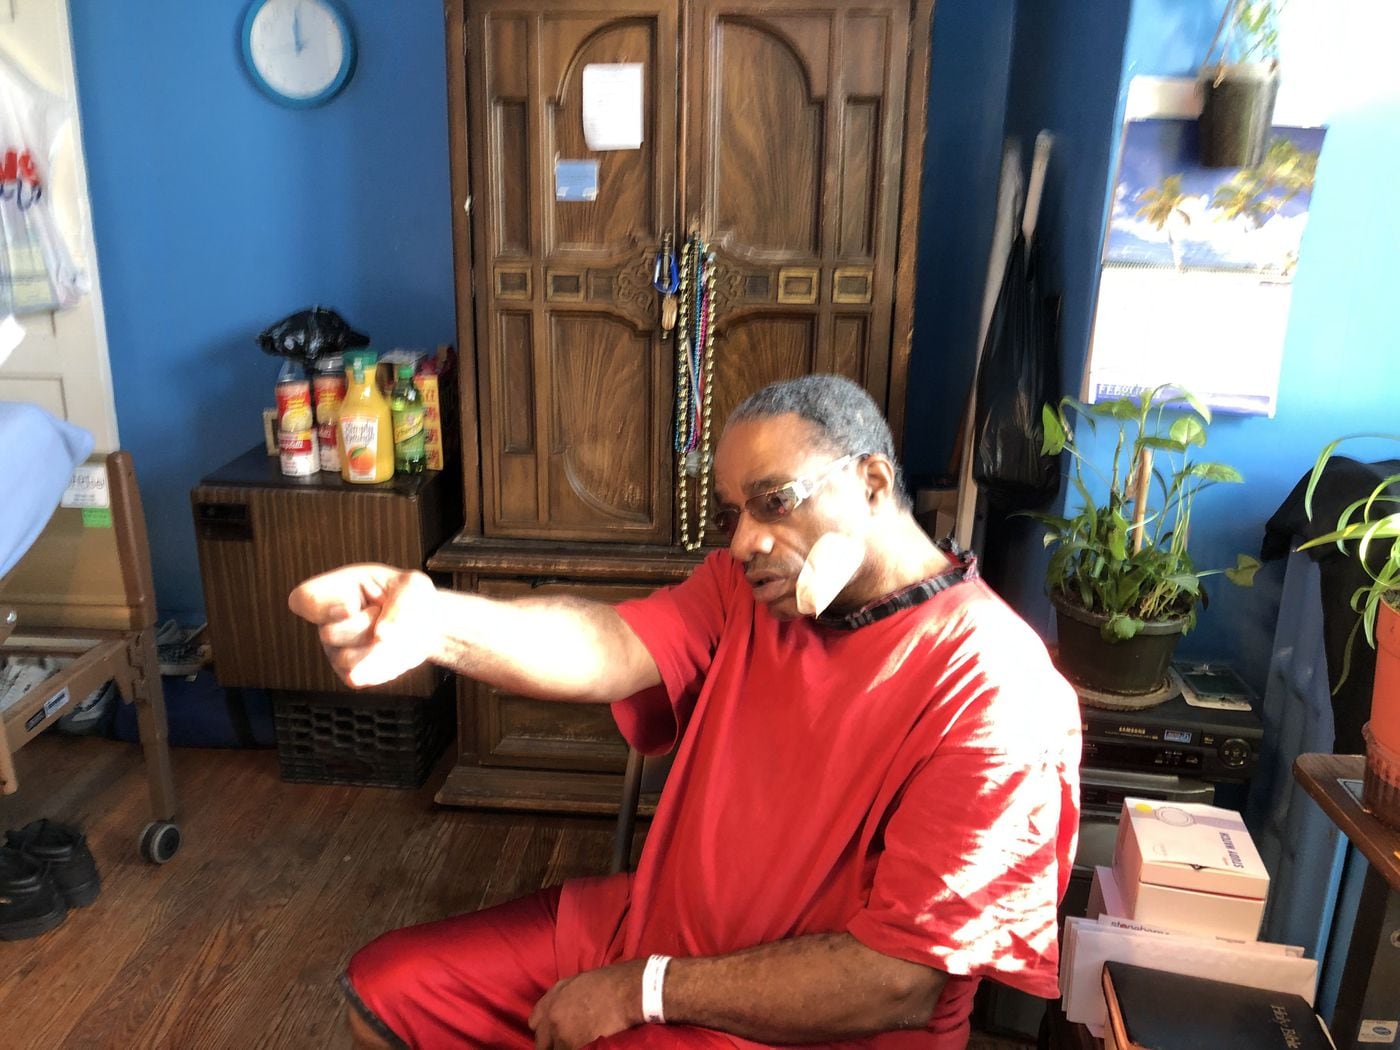 Glenn Hudson, 61, on Jan. 22, 2019 at his North Philadelphia home, demonstrates how a teenage robber shot him at close range on a street corner Jan. 16, 2019. No one has been arrested.